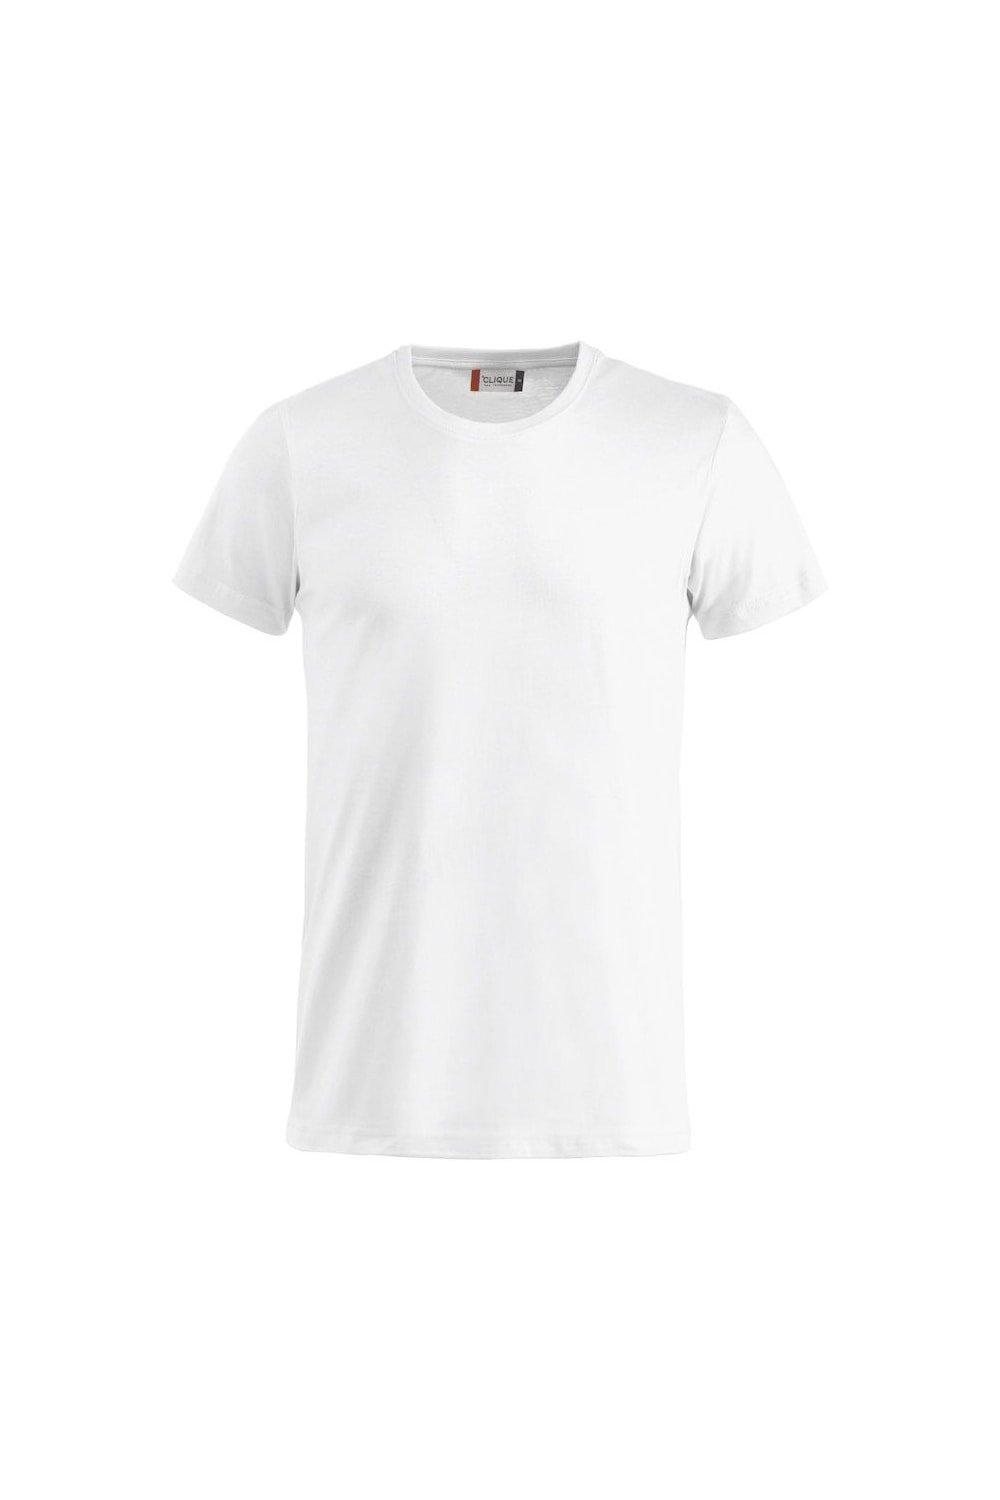 Базовая футболка Clique, белый футболка clique с надписью 42 размер